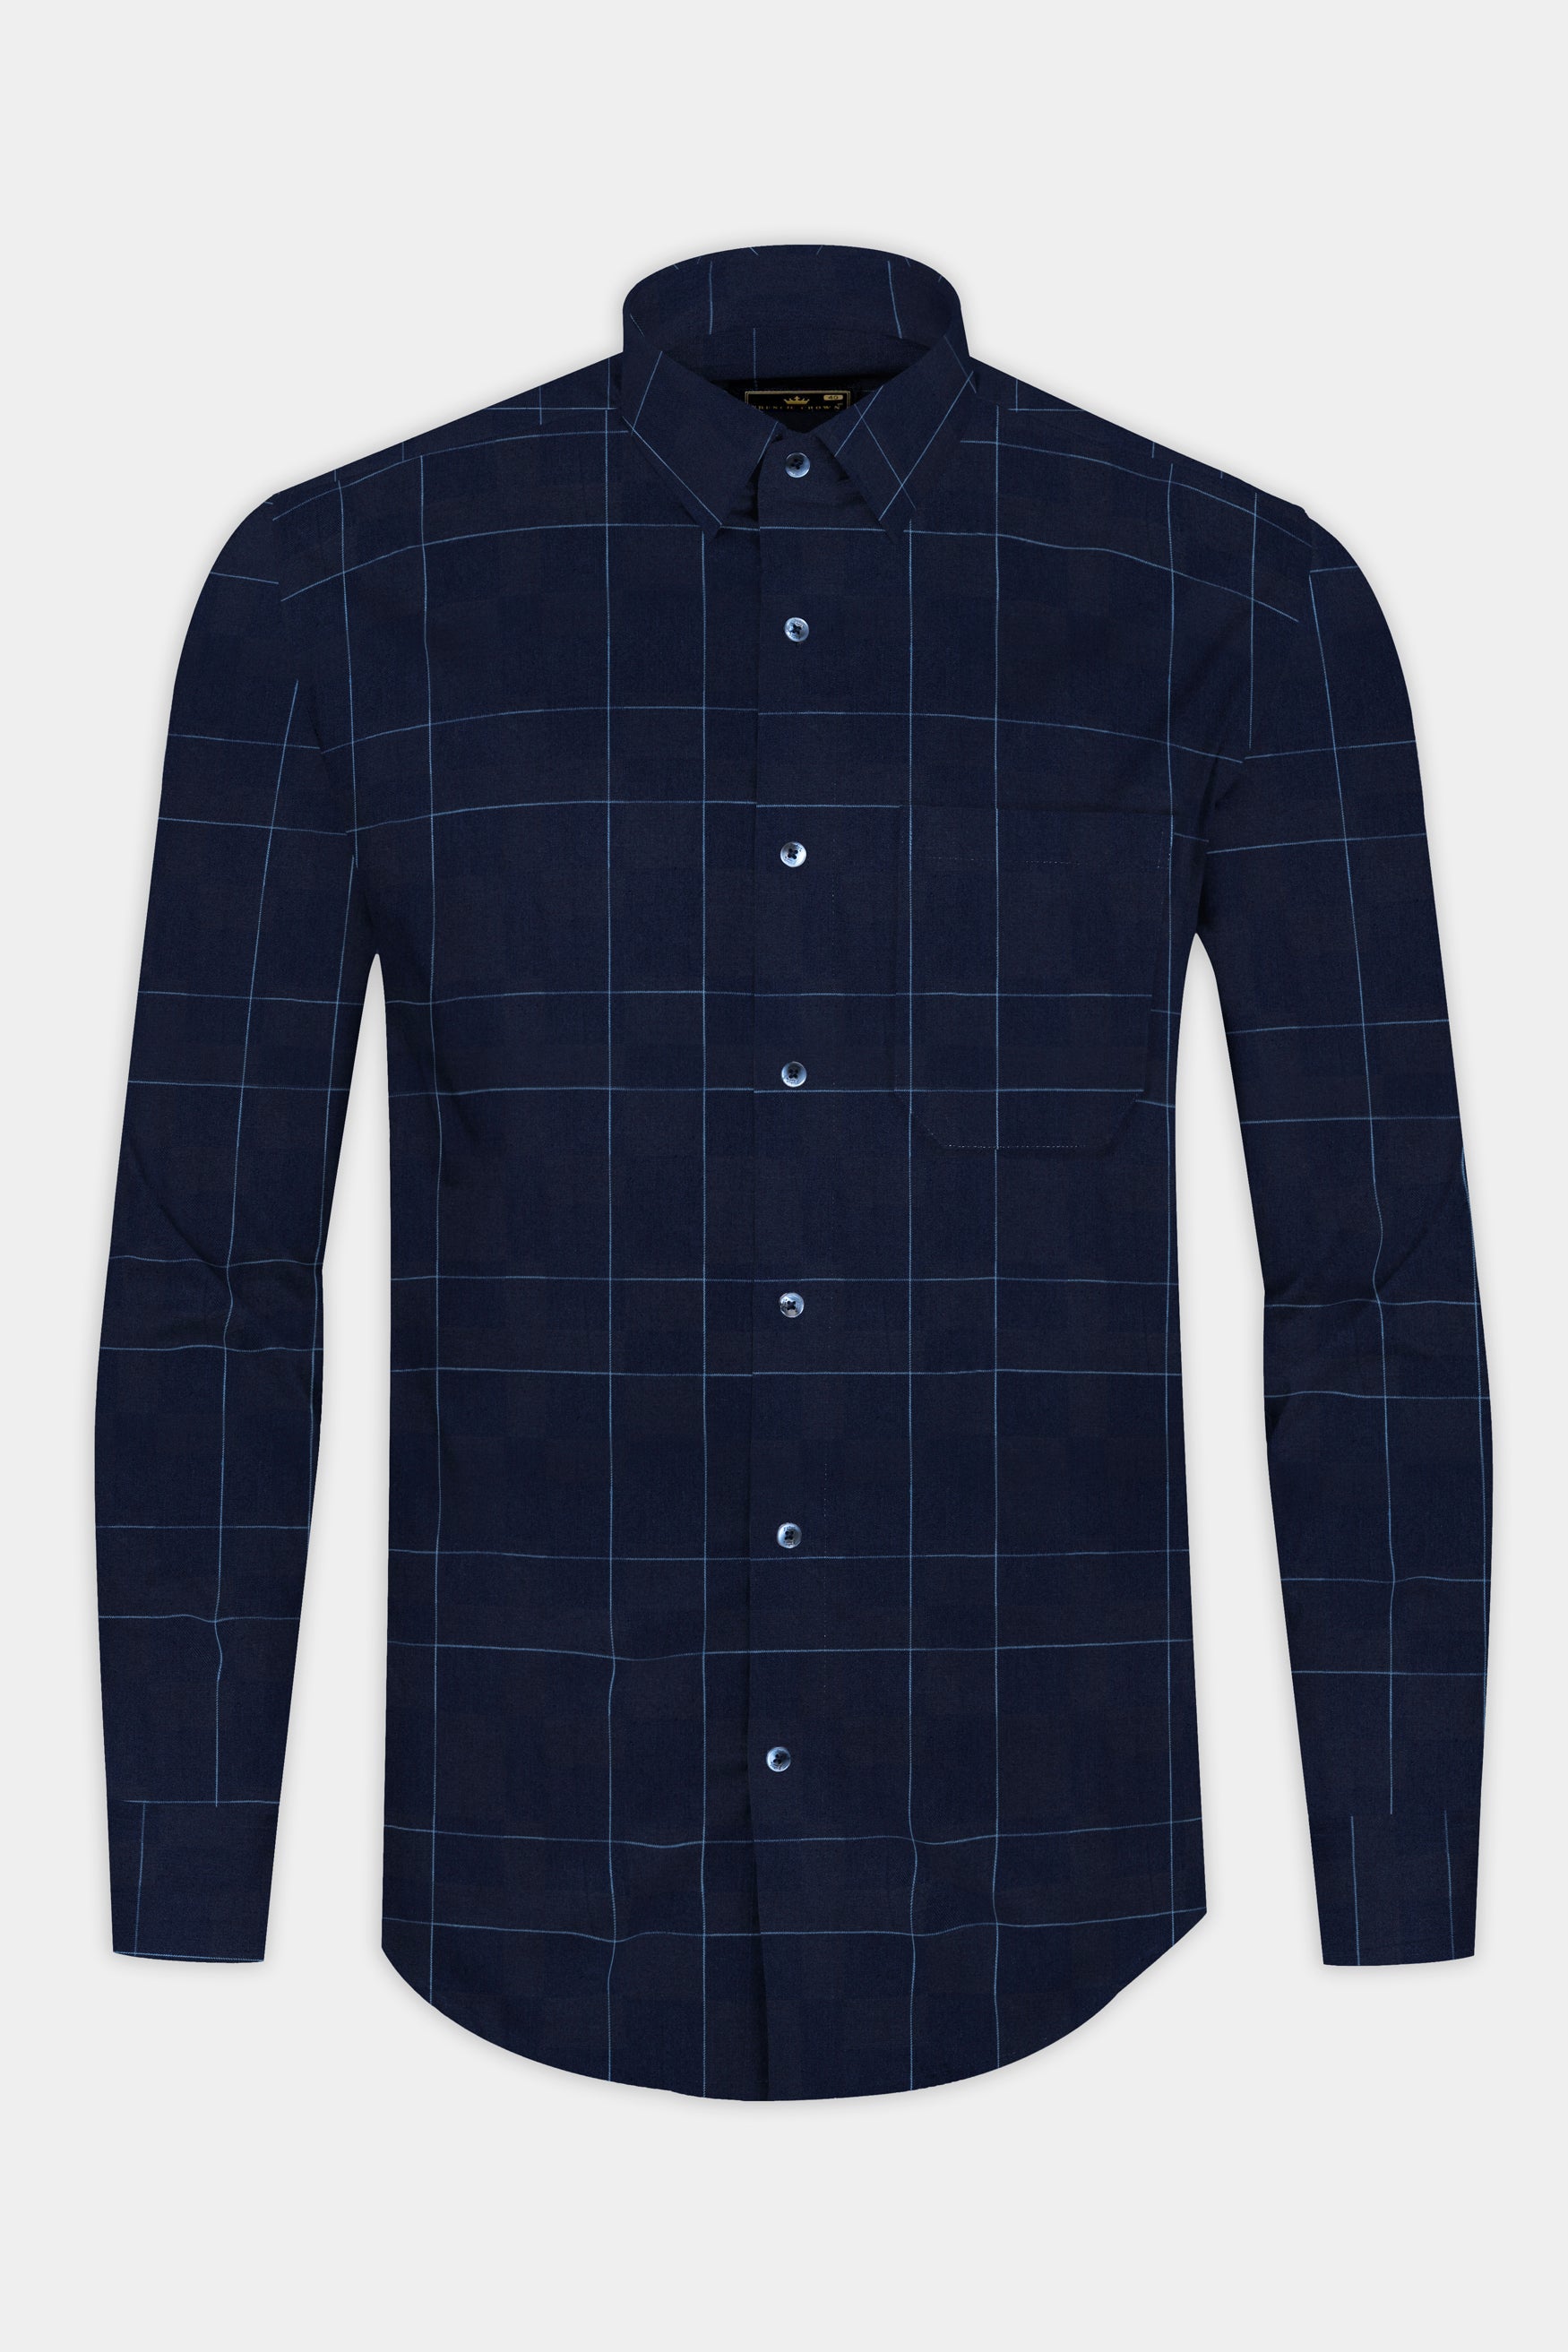 Mirage Blue Windowpane Dobby Textured Premium Giza Cotton Shirt